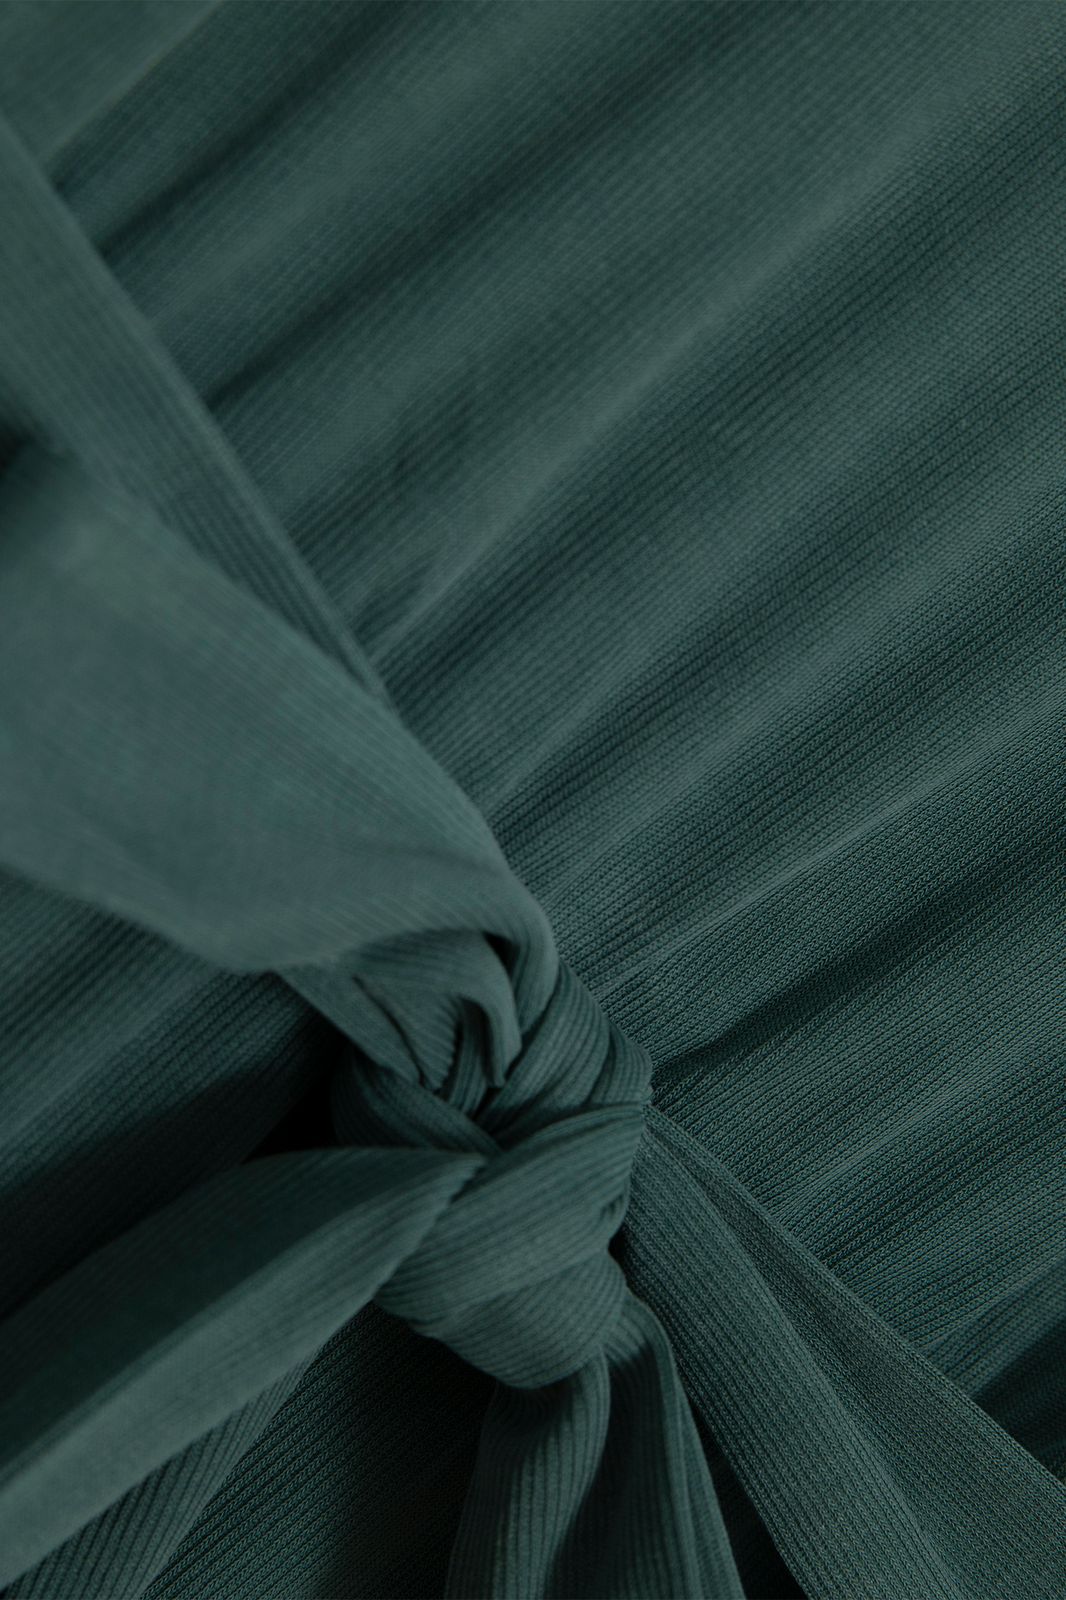 Midi-Kleid mit Taillenband - dunkelgrün